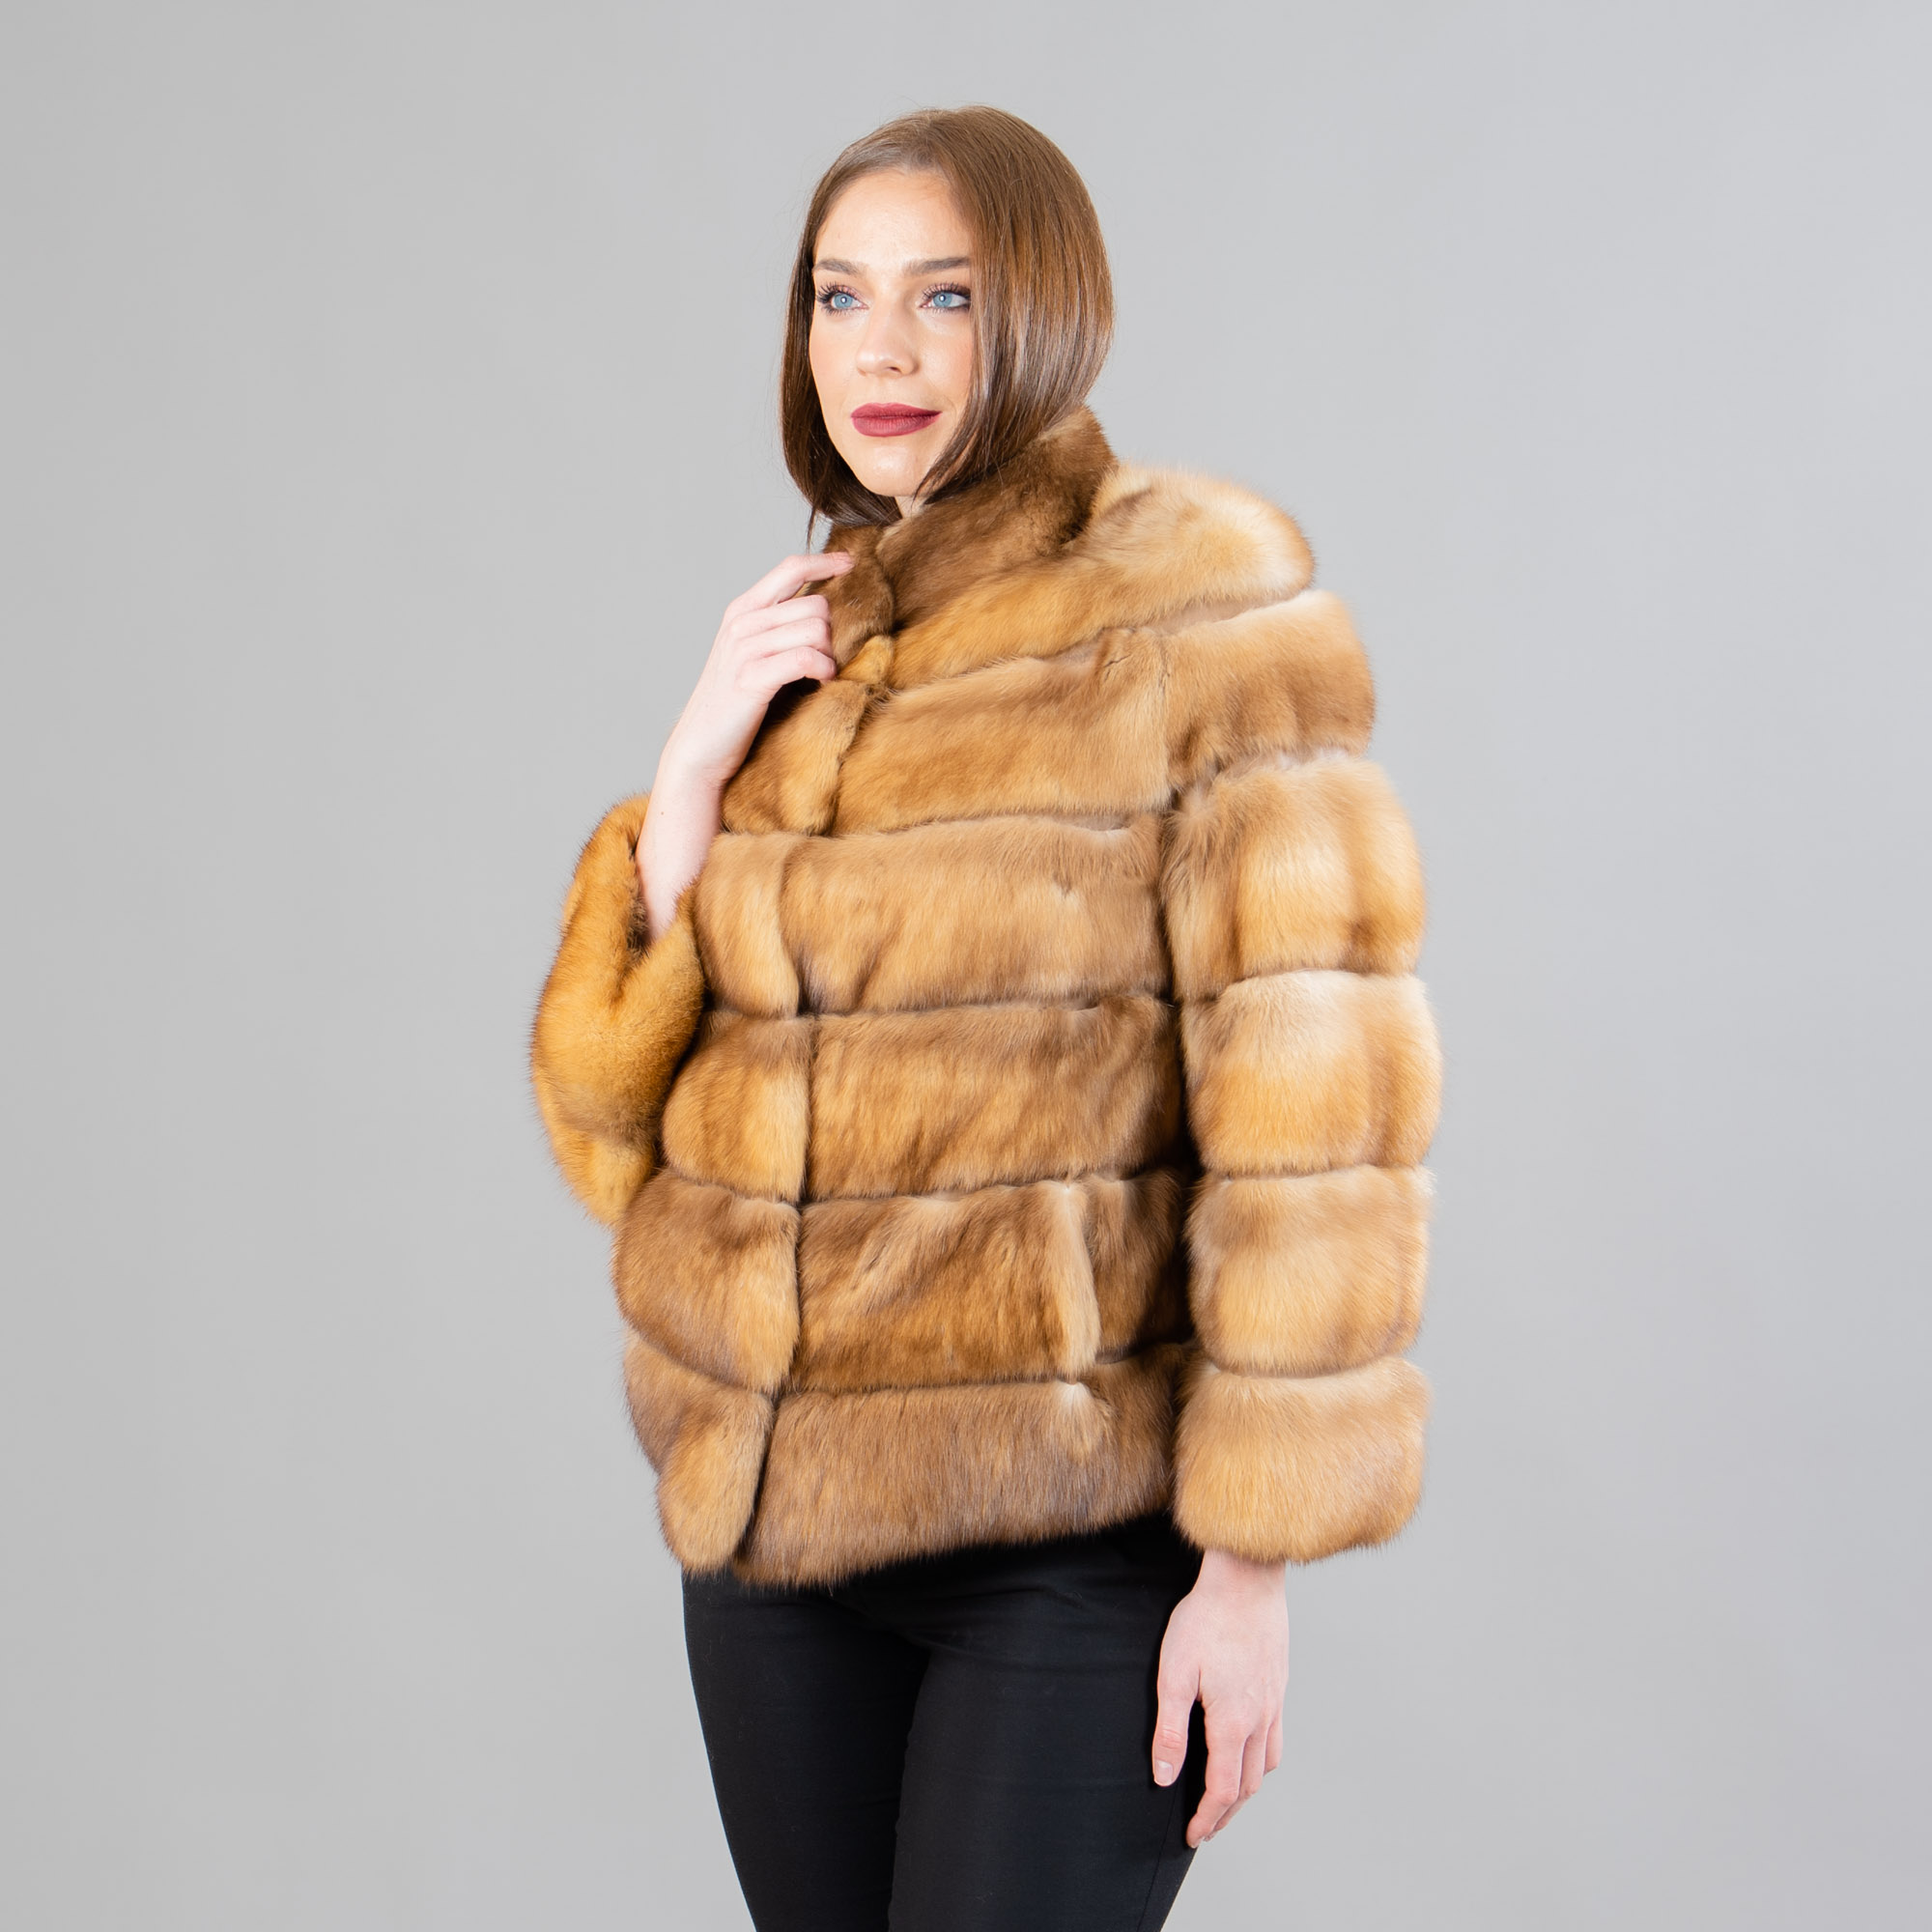 Sable fur jacket in gold color